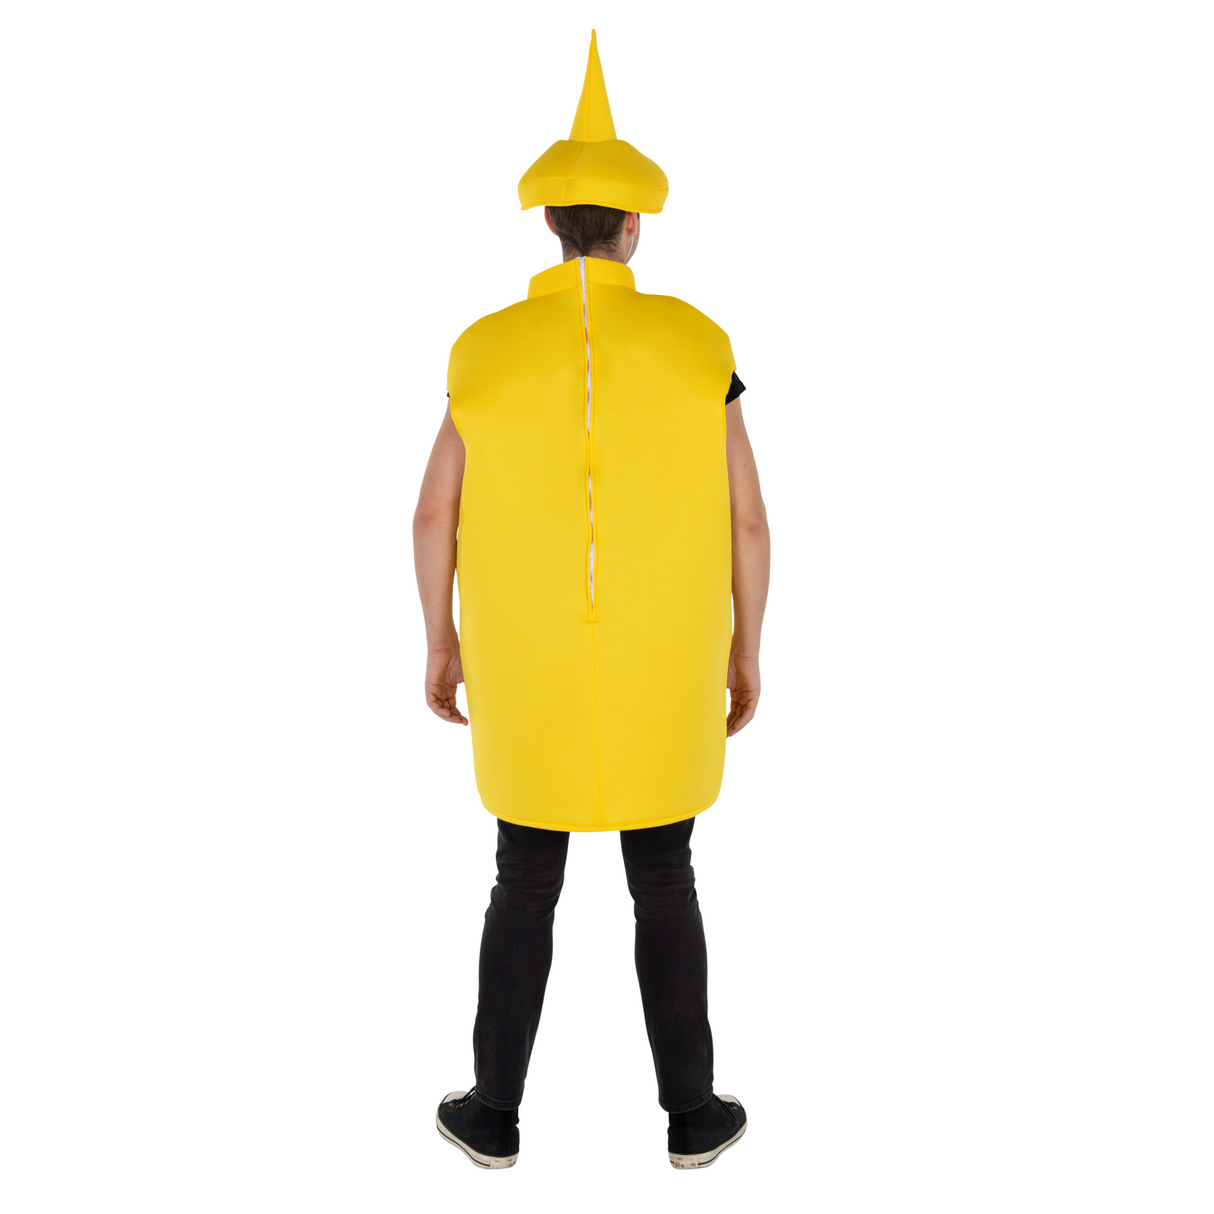 Mustard Bottle Costume - Adults